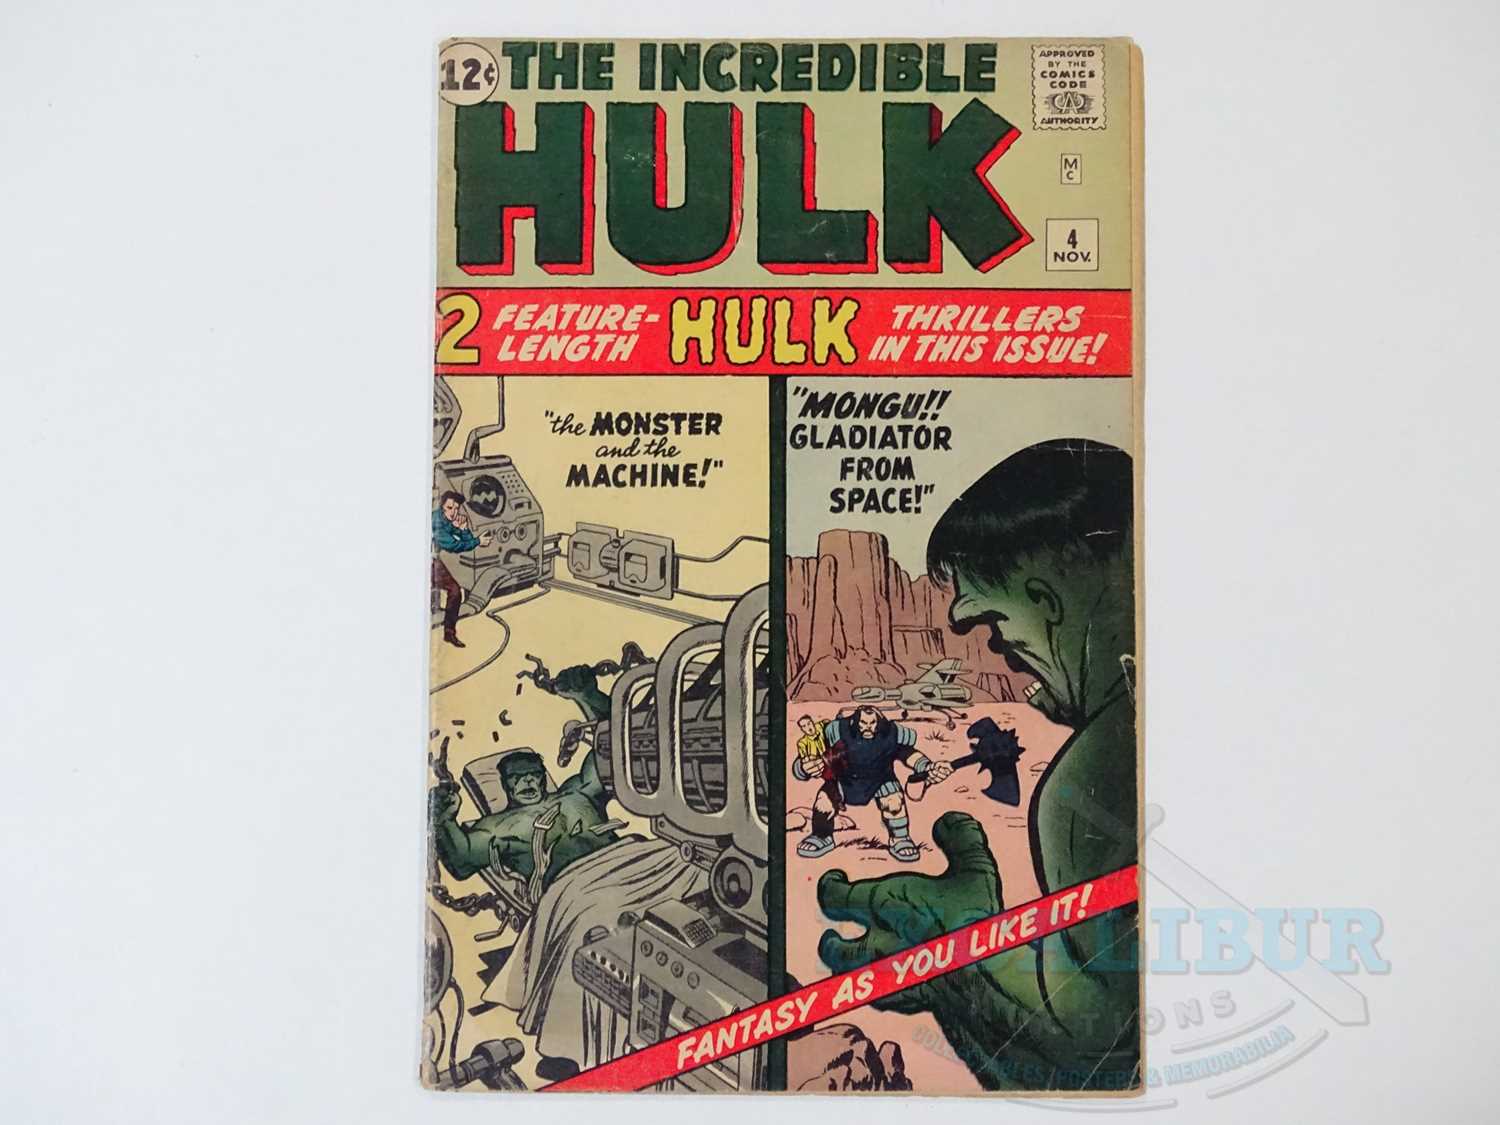 INCREDIBLE HULK #4 (1962 - MARVEL) - Origin retold - Jack Kirby cover & interior art - Flat/Unfolded